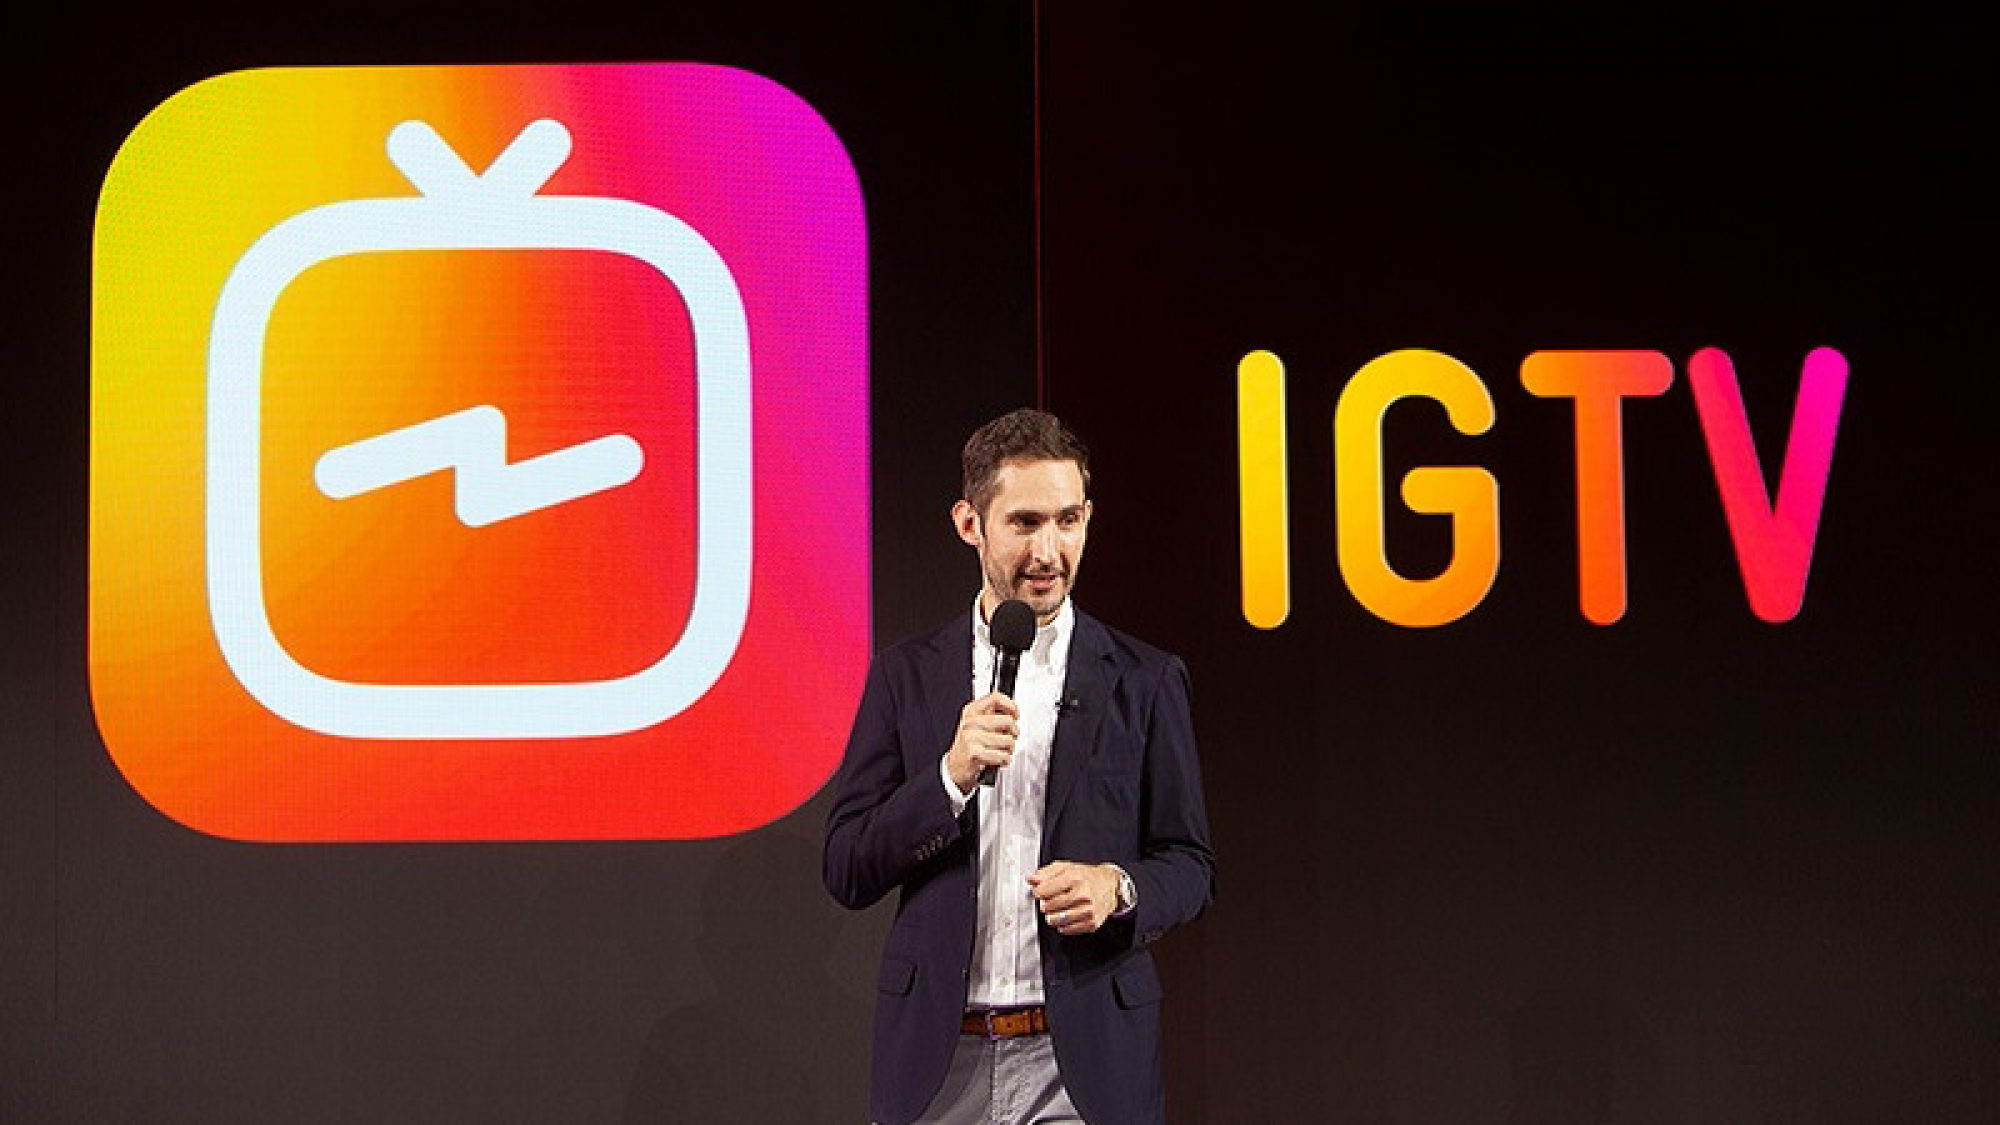 Instagram-Chef Kevin Systrom stellt IGTV vor. (Foto: Instagram)